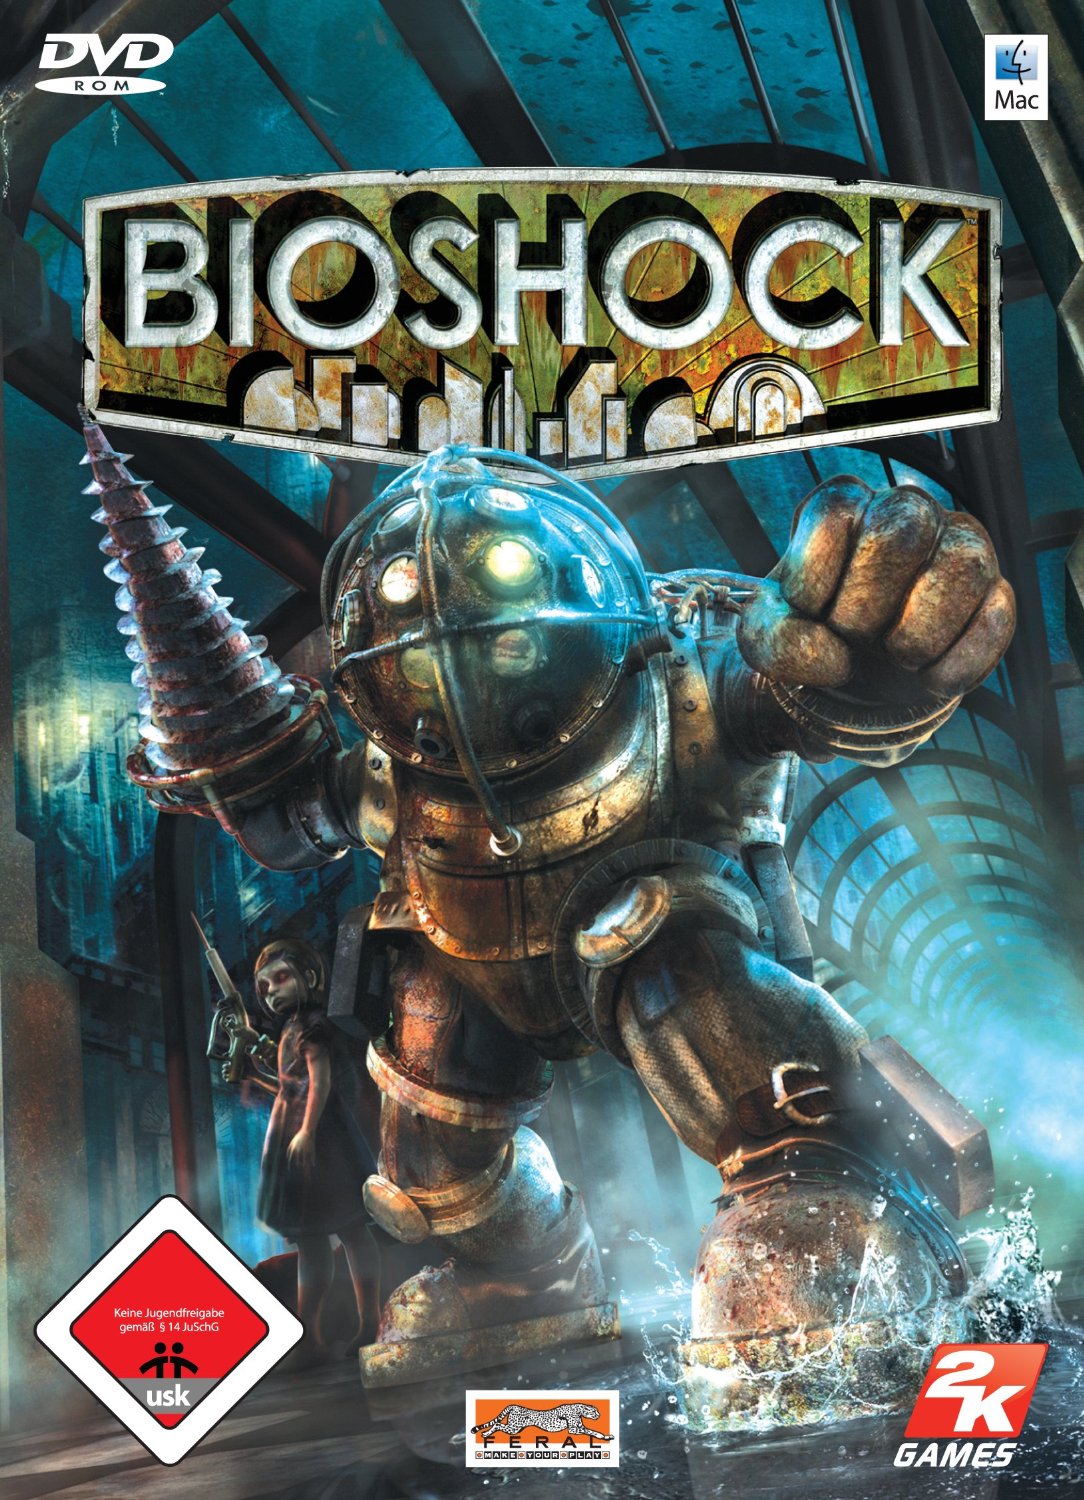 BioShock 1